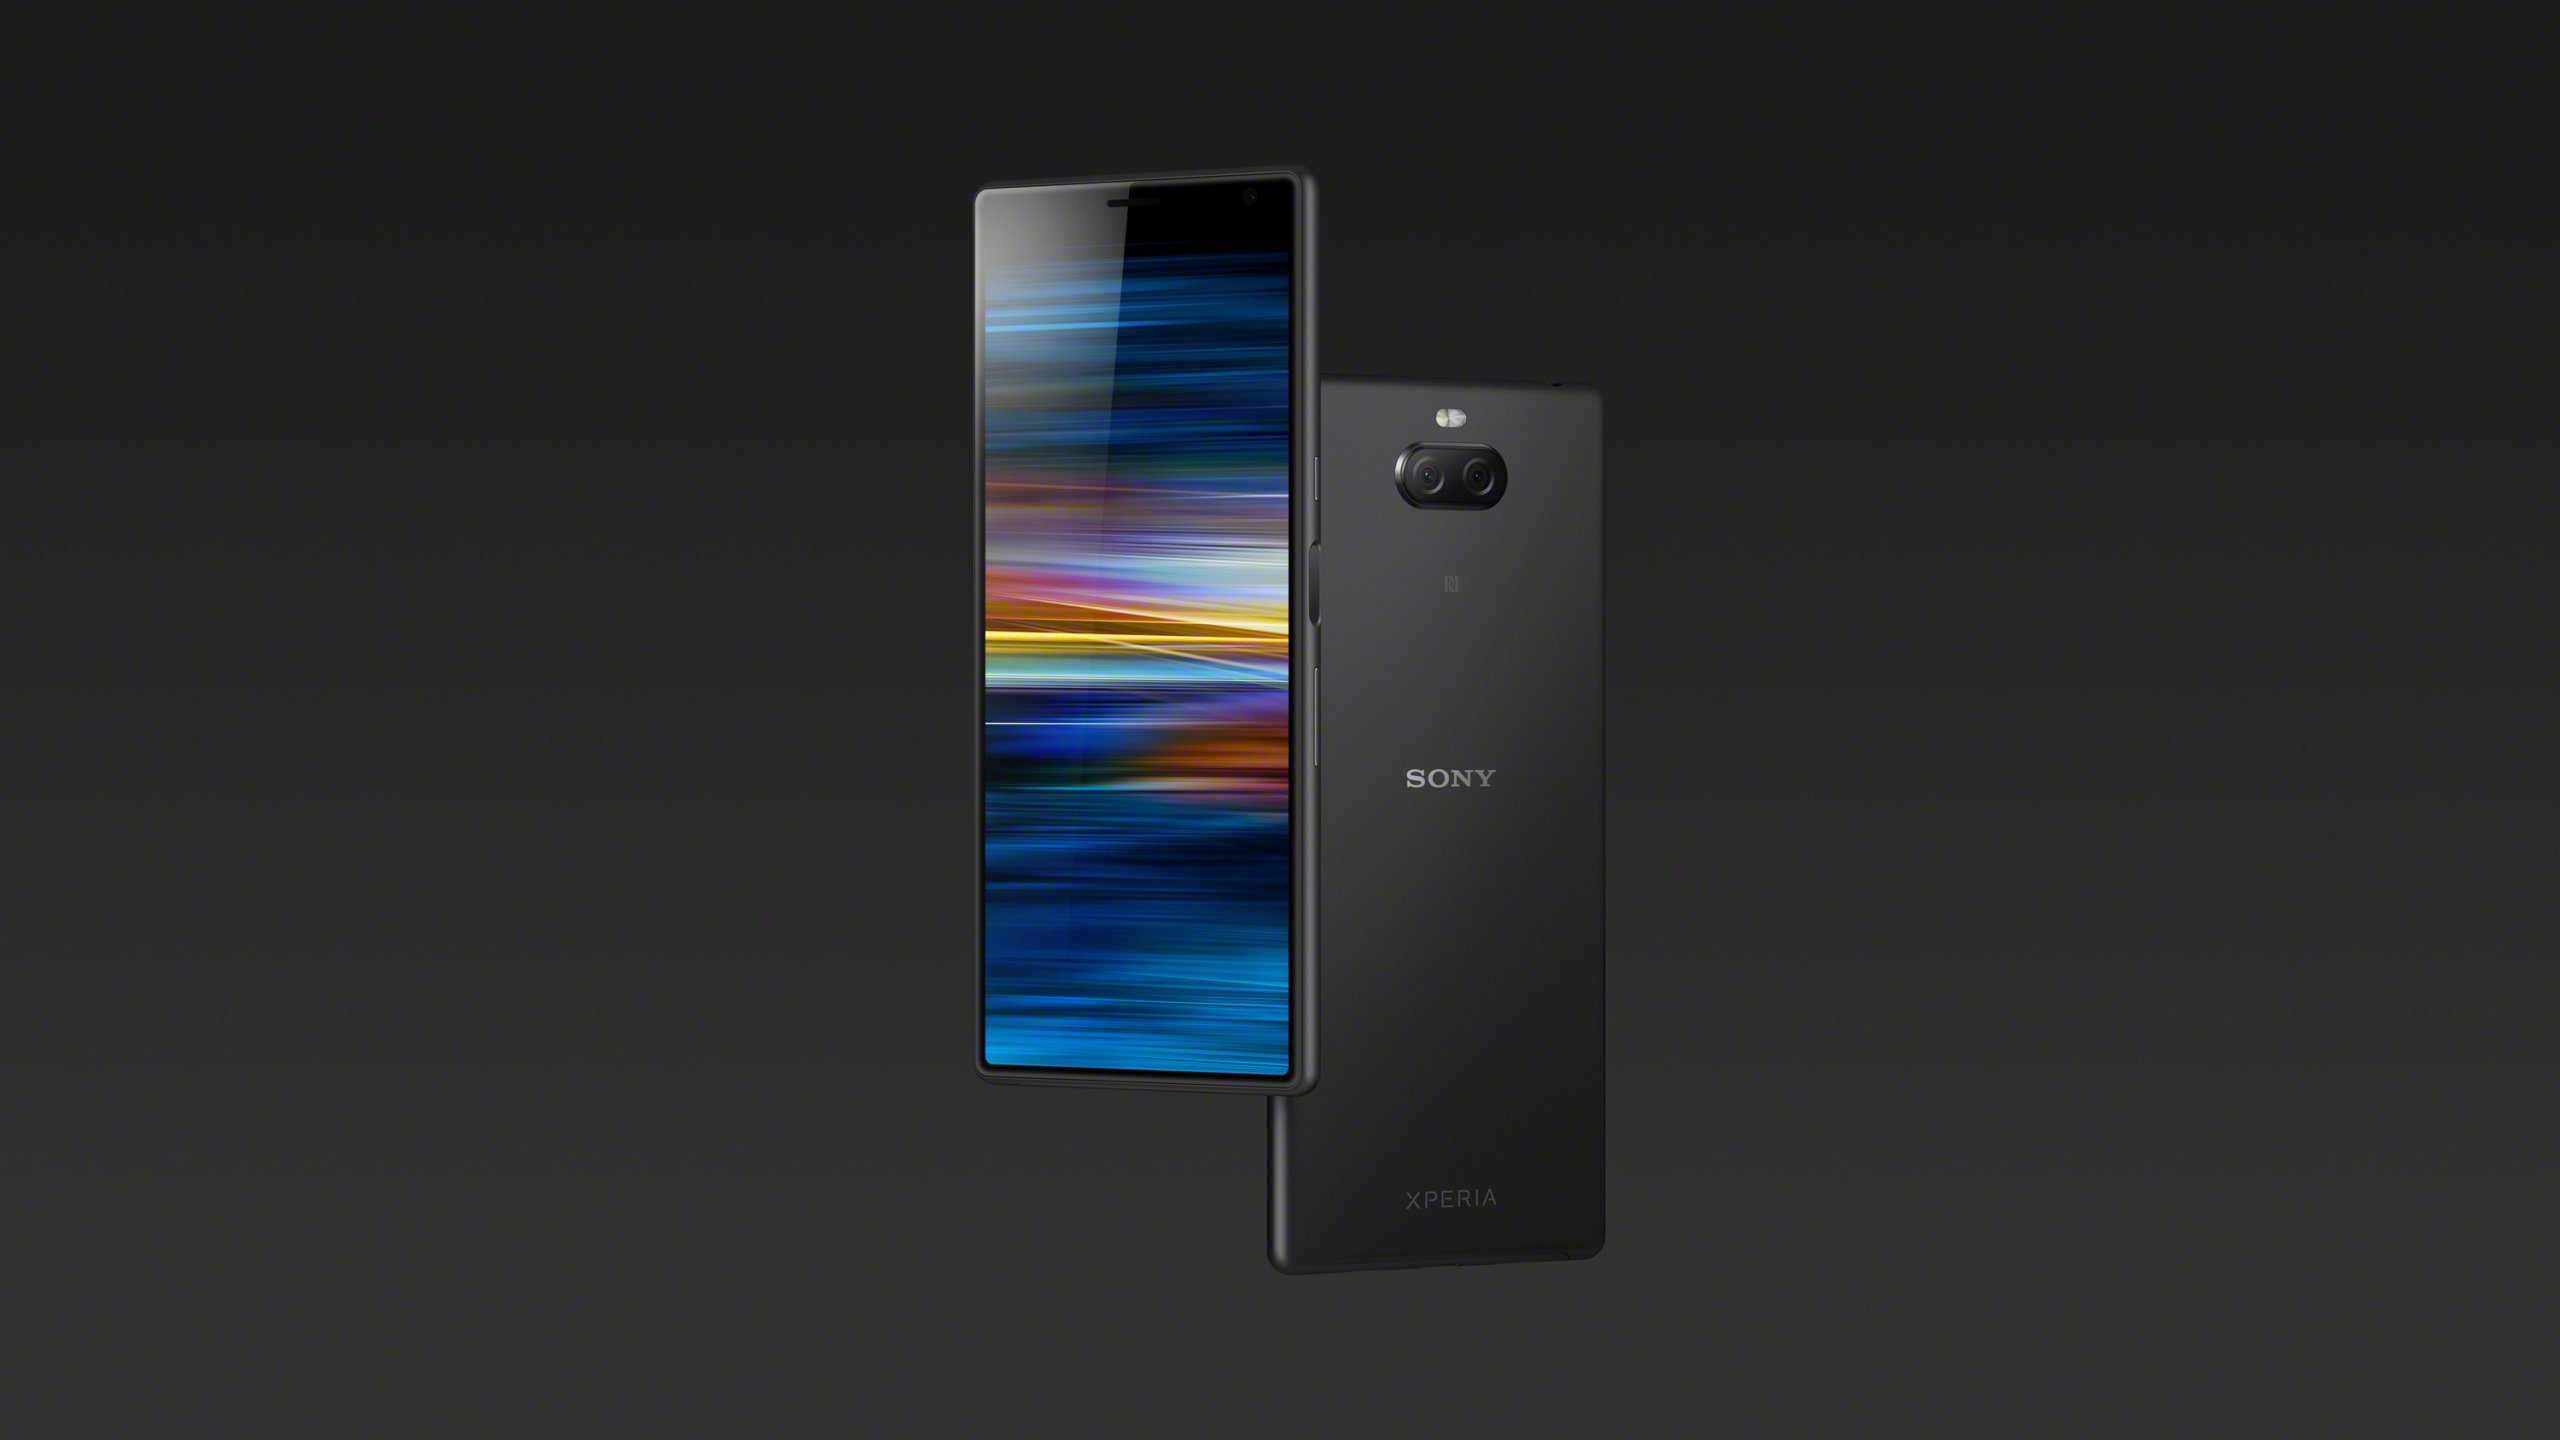 [Mwc2019] Sony Releases 3 Devices: Sony Xperia 1, Sony Xperia 10, Sony Xperia 10 Plus